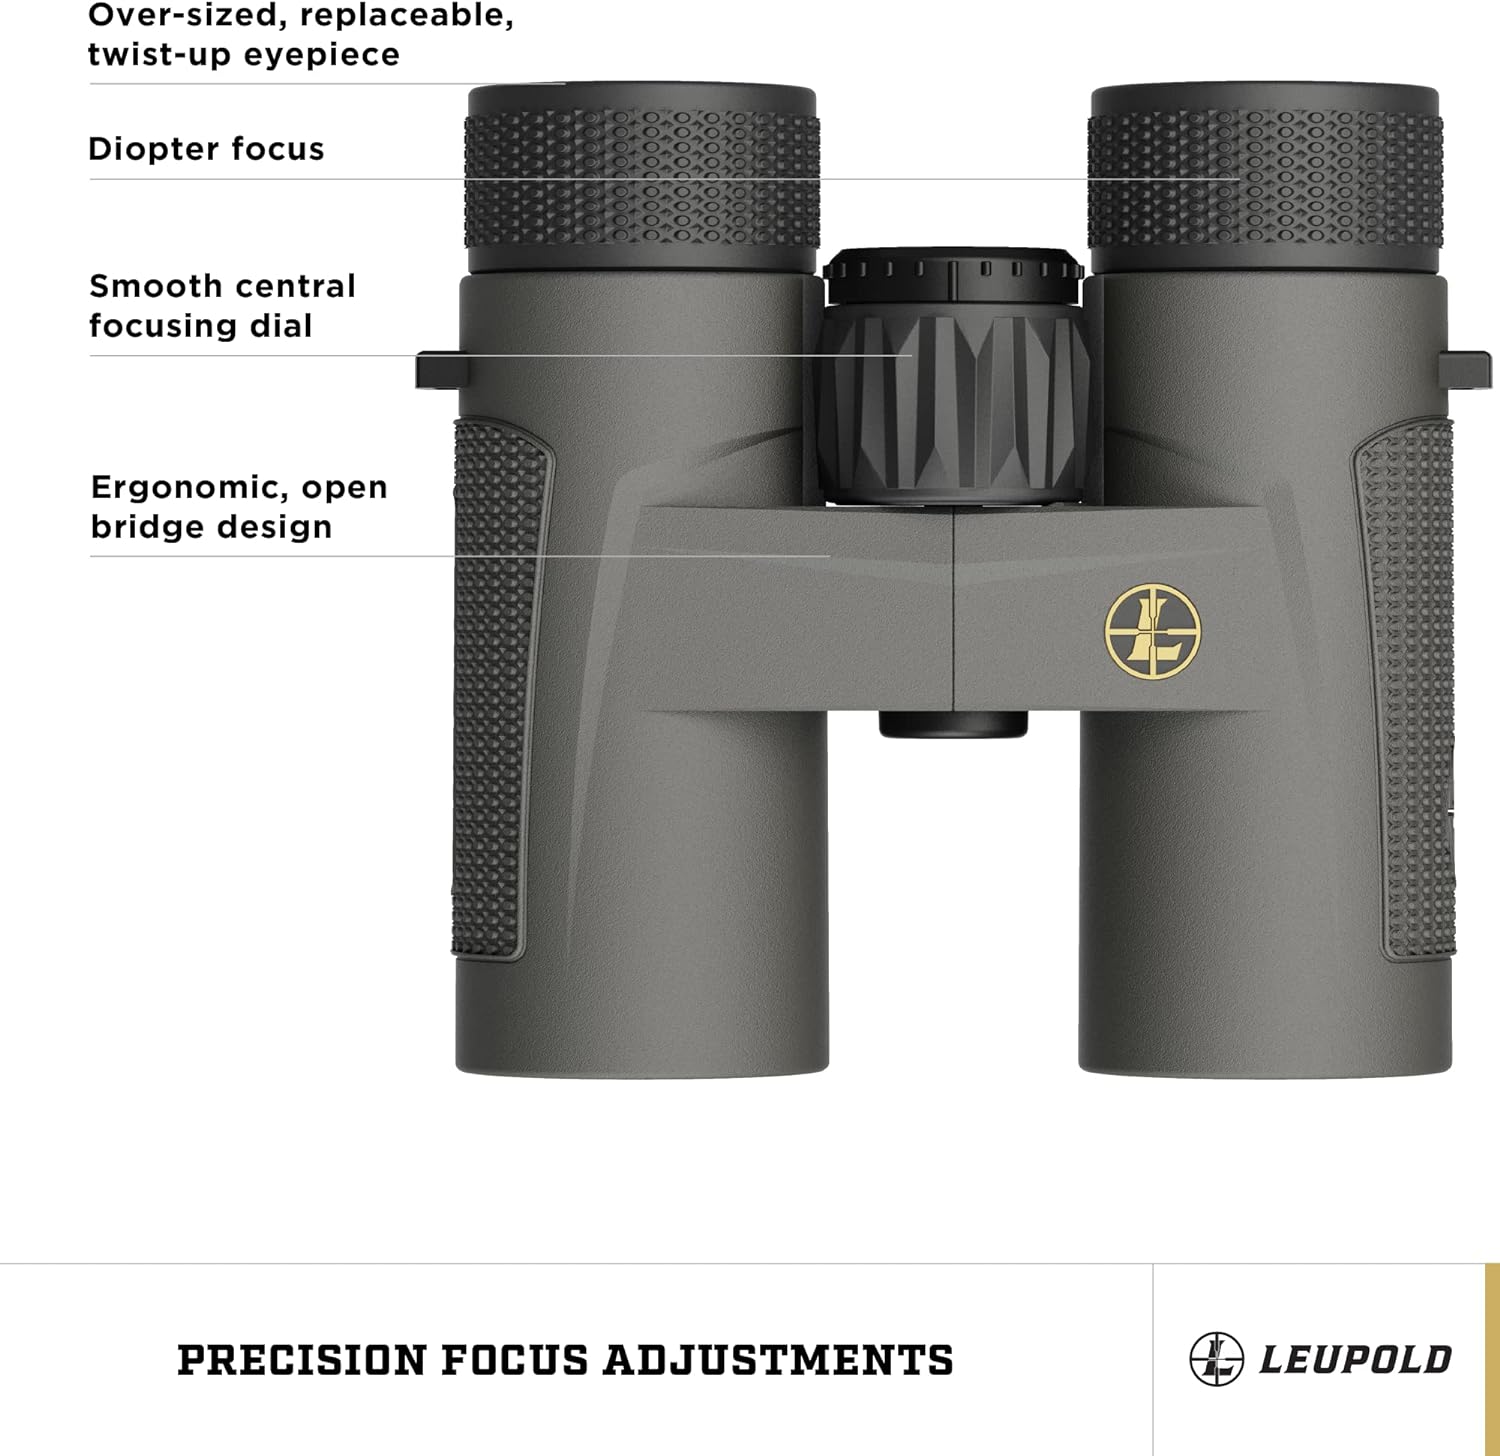 Leupold BX-4 Pro Guide HD Binoculars, 10x42mm, Shadow Gray (172666)